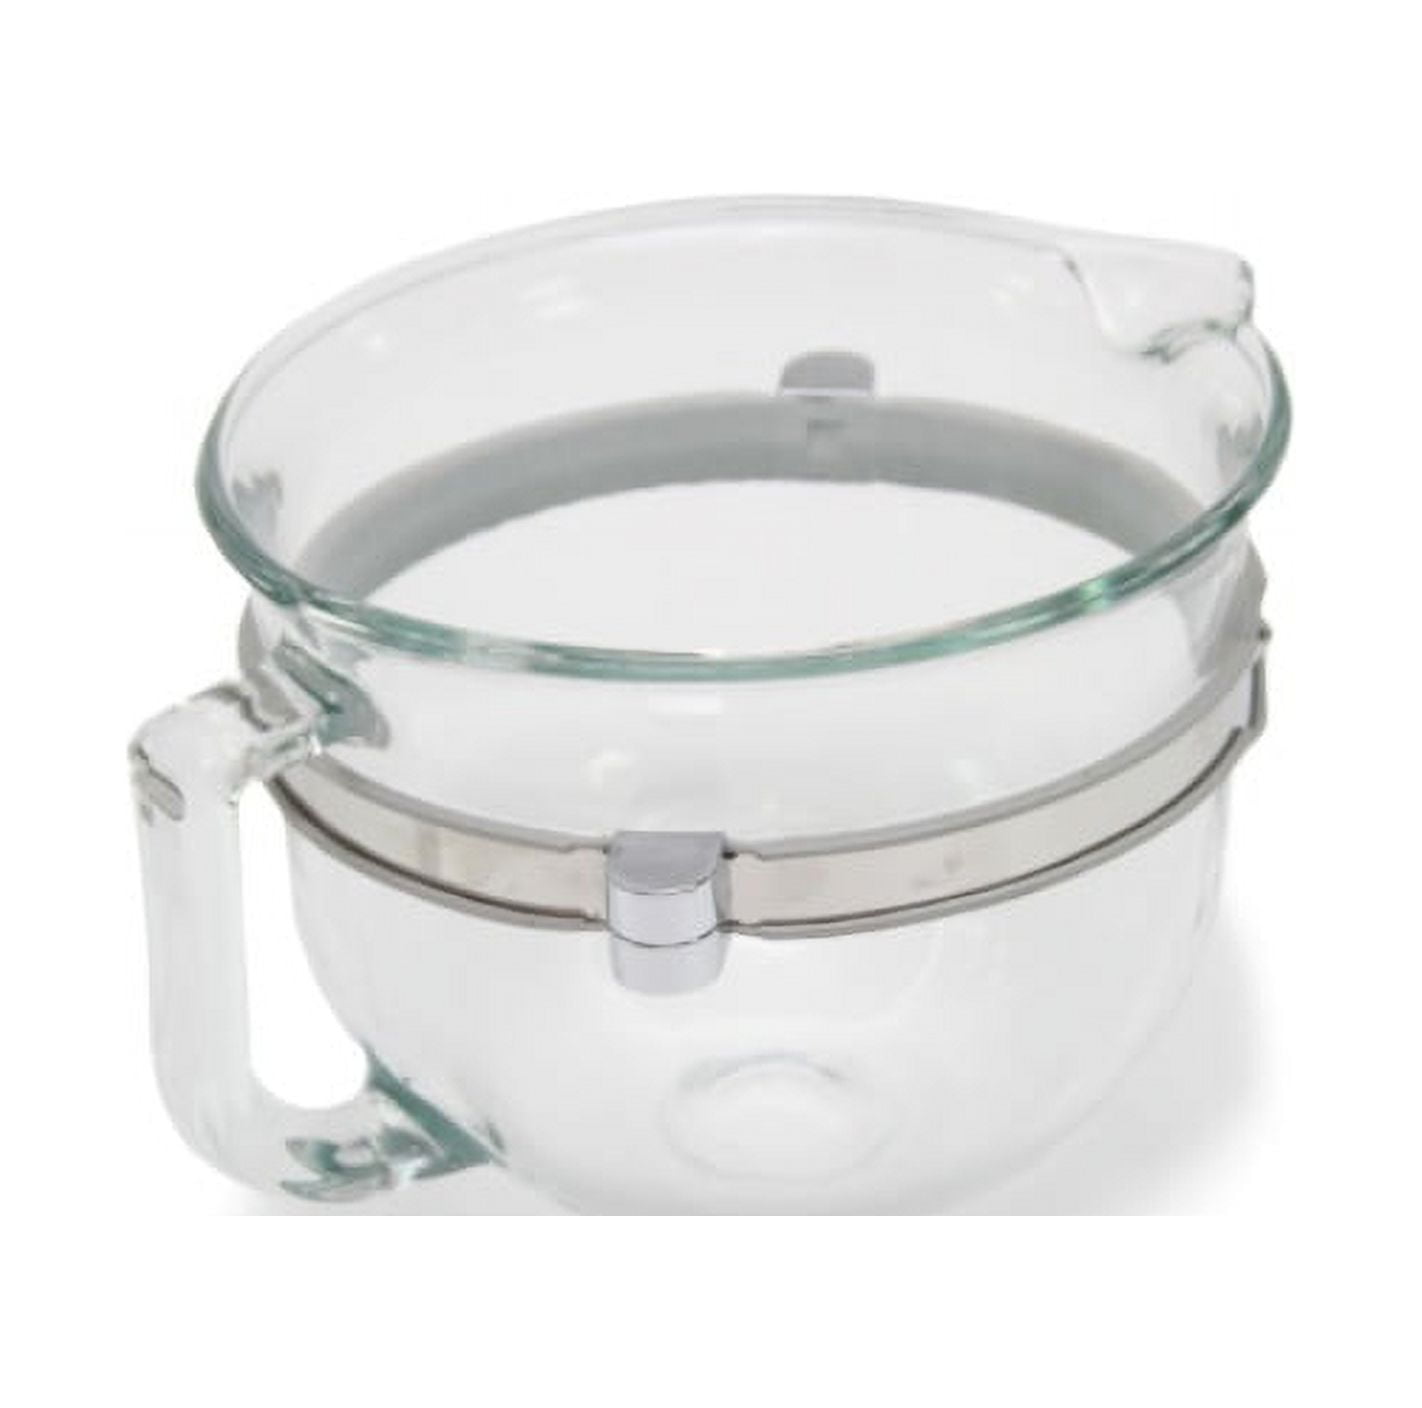 KitchenAid® F-Series 6-Quart Glass Bowl Accessory Bundle